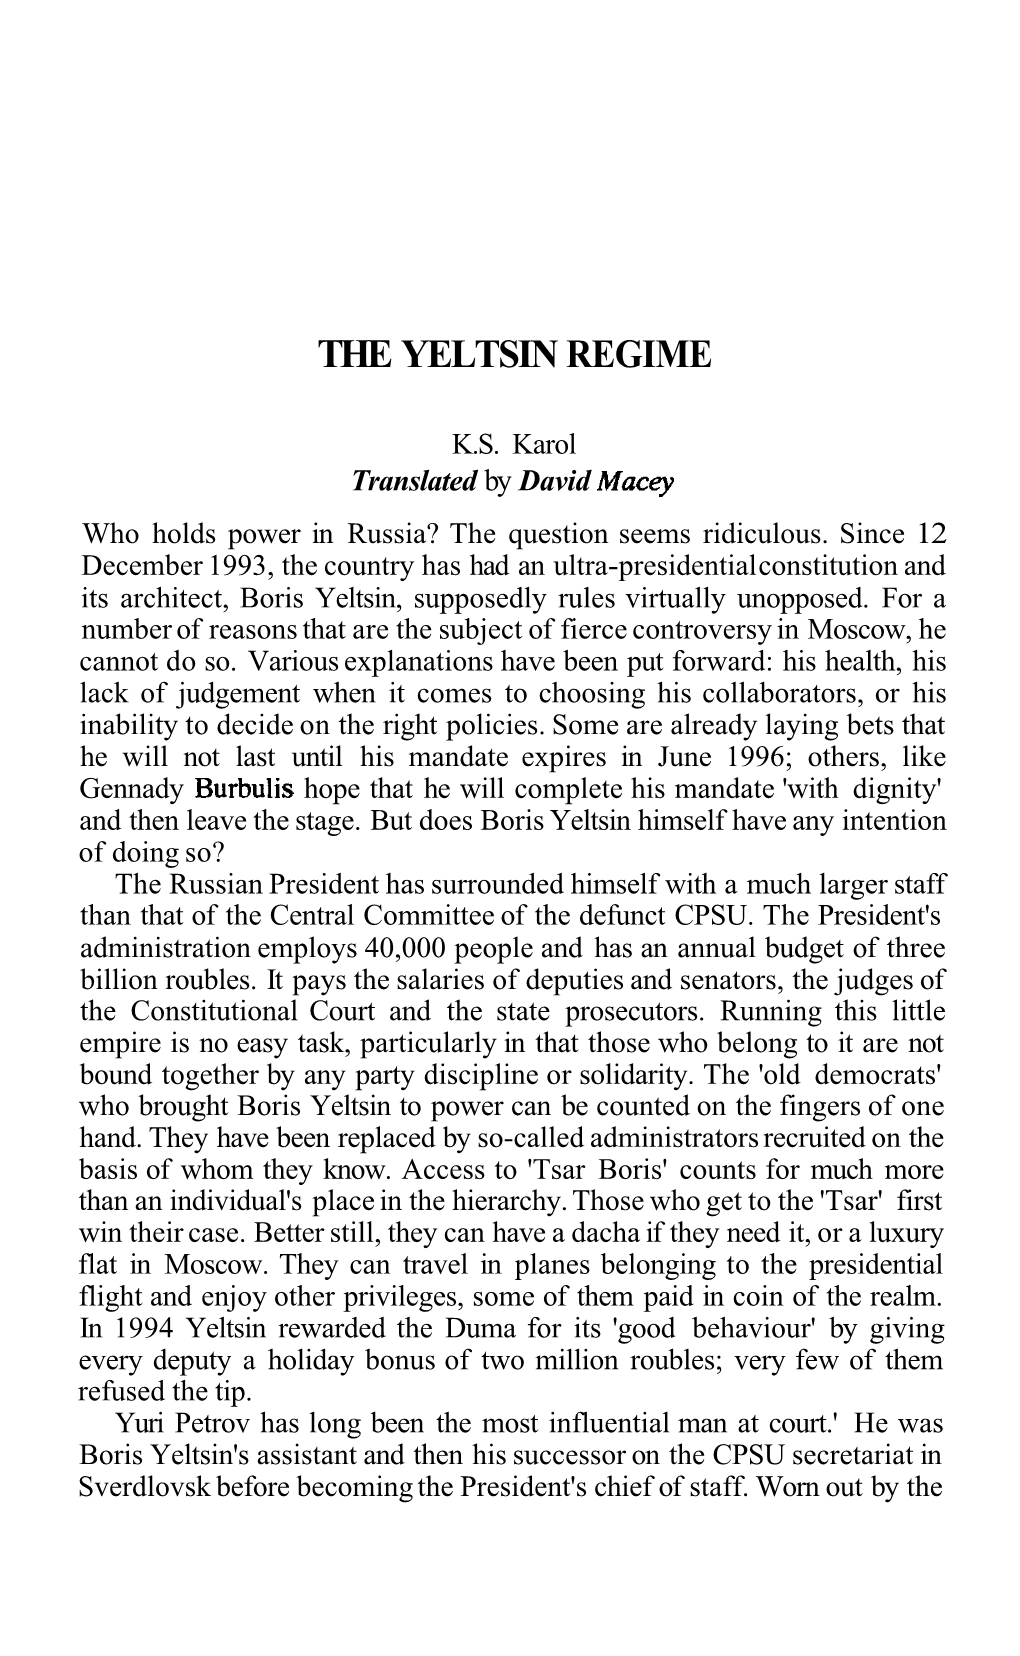 The Yeltsin Regime